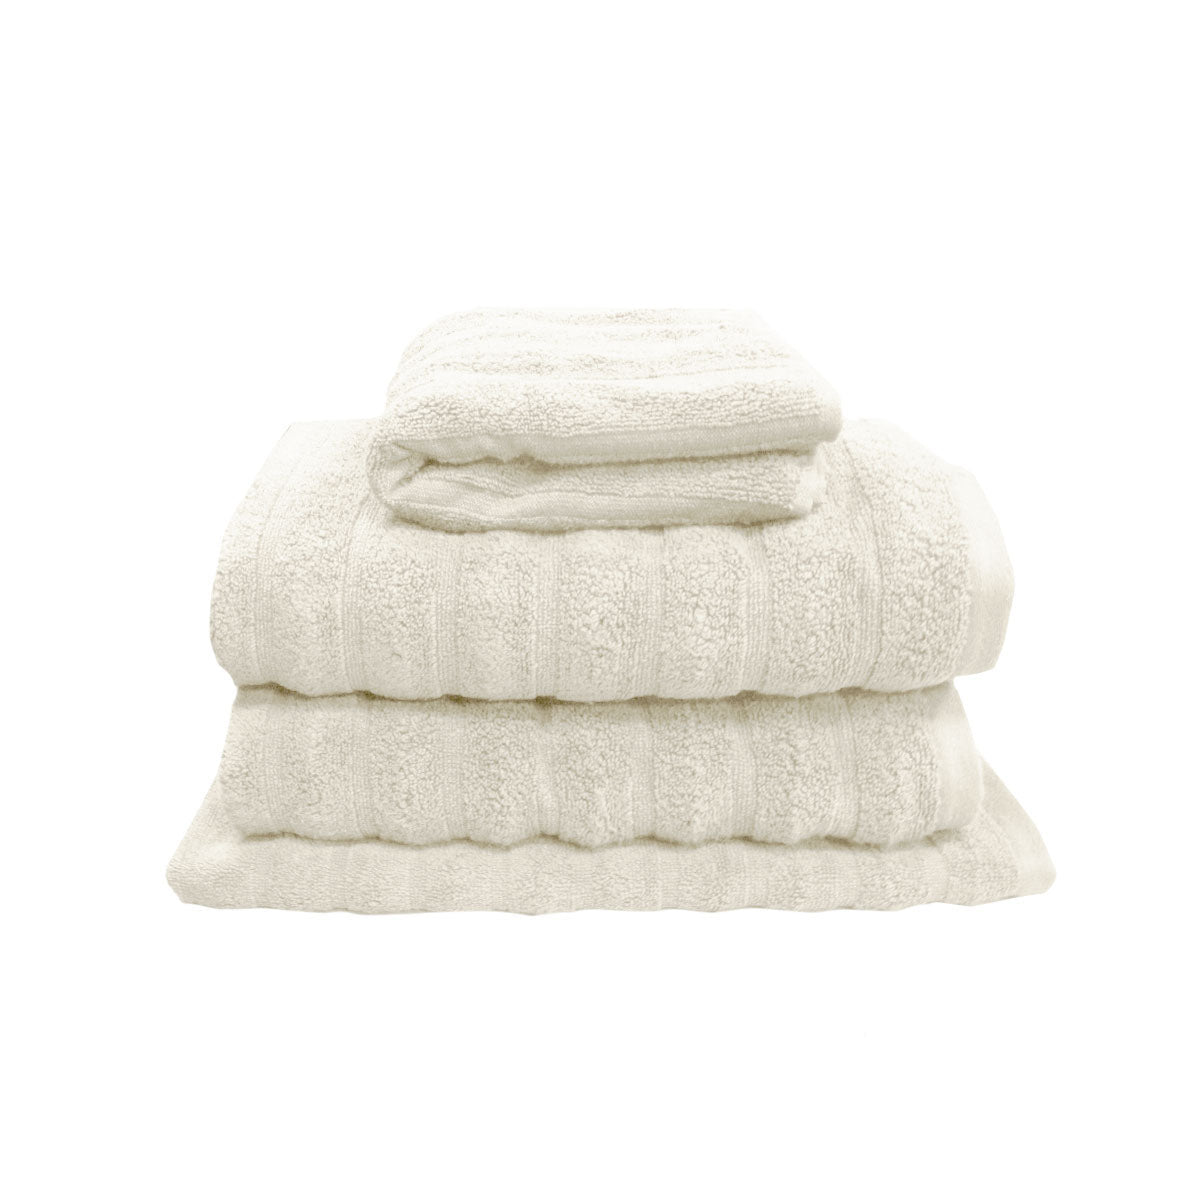 J Elliot Home Set of 4 George Collective Cotton Bath Towel Set Snow - Bath Towel - Zanlana Design and Home Decor